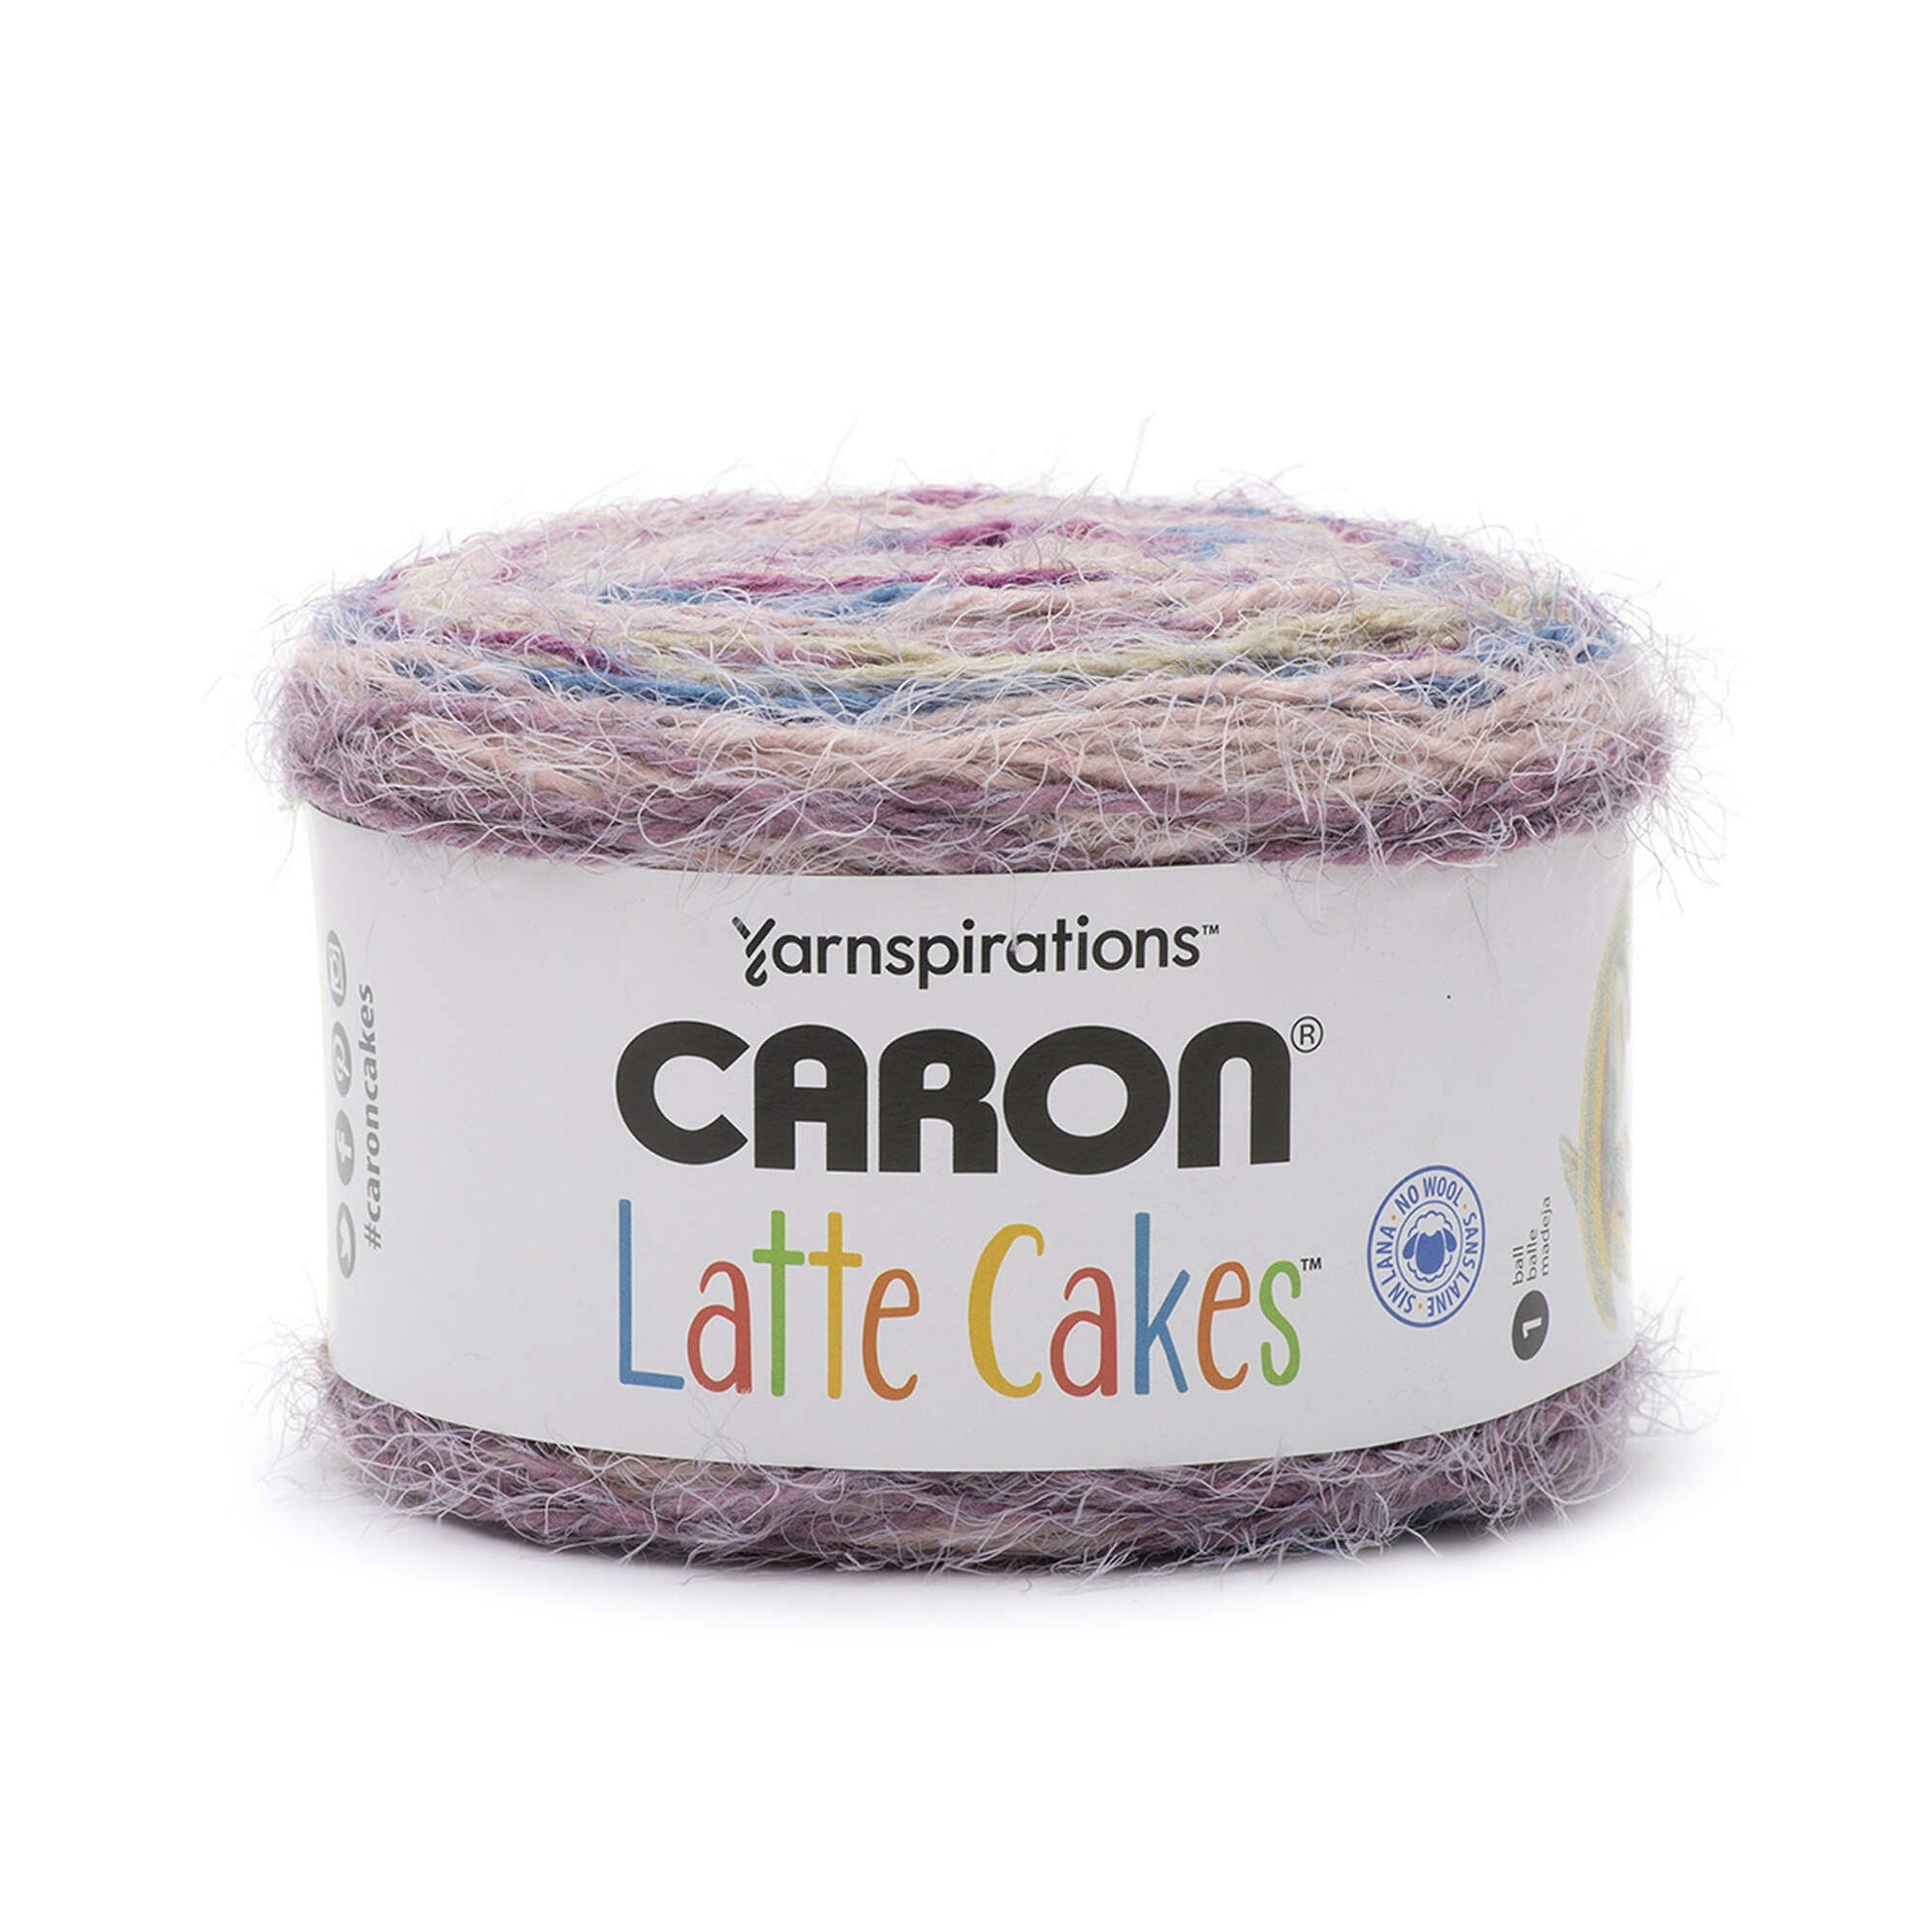 Yarnspirations Caron Baby Cakes Yarn - Pool Party - 8.5 oz